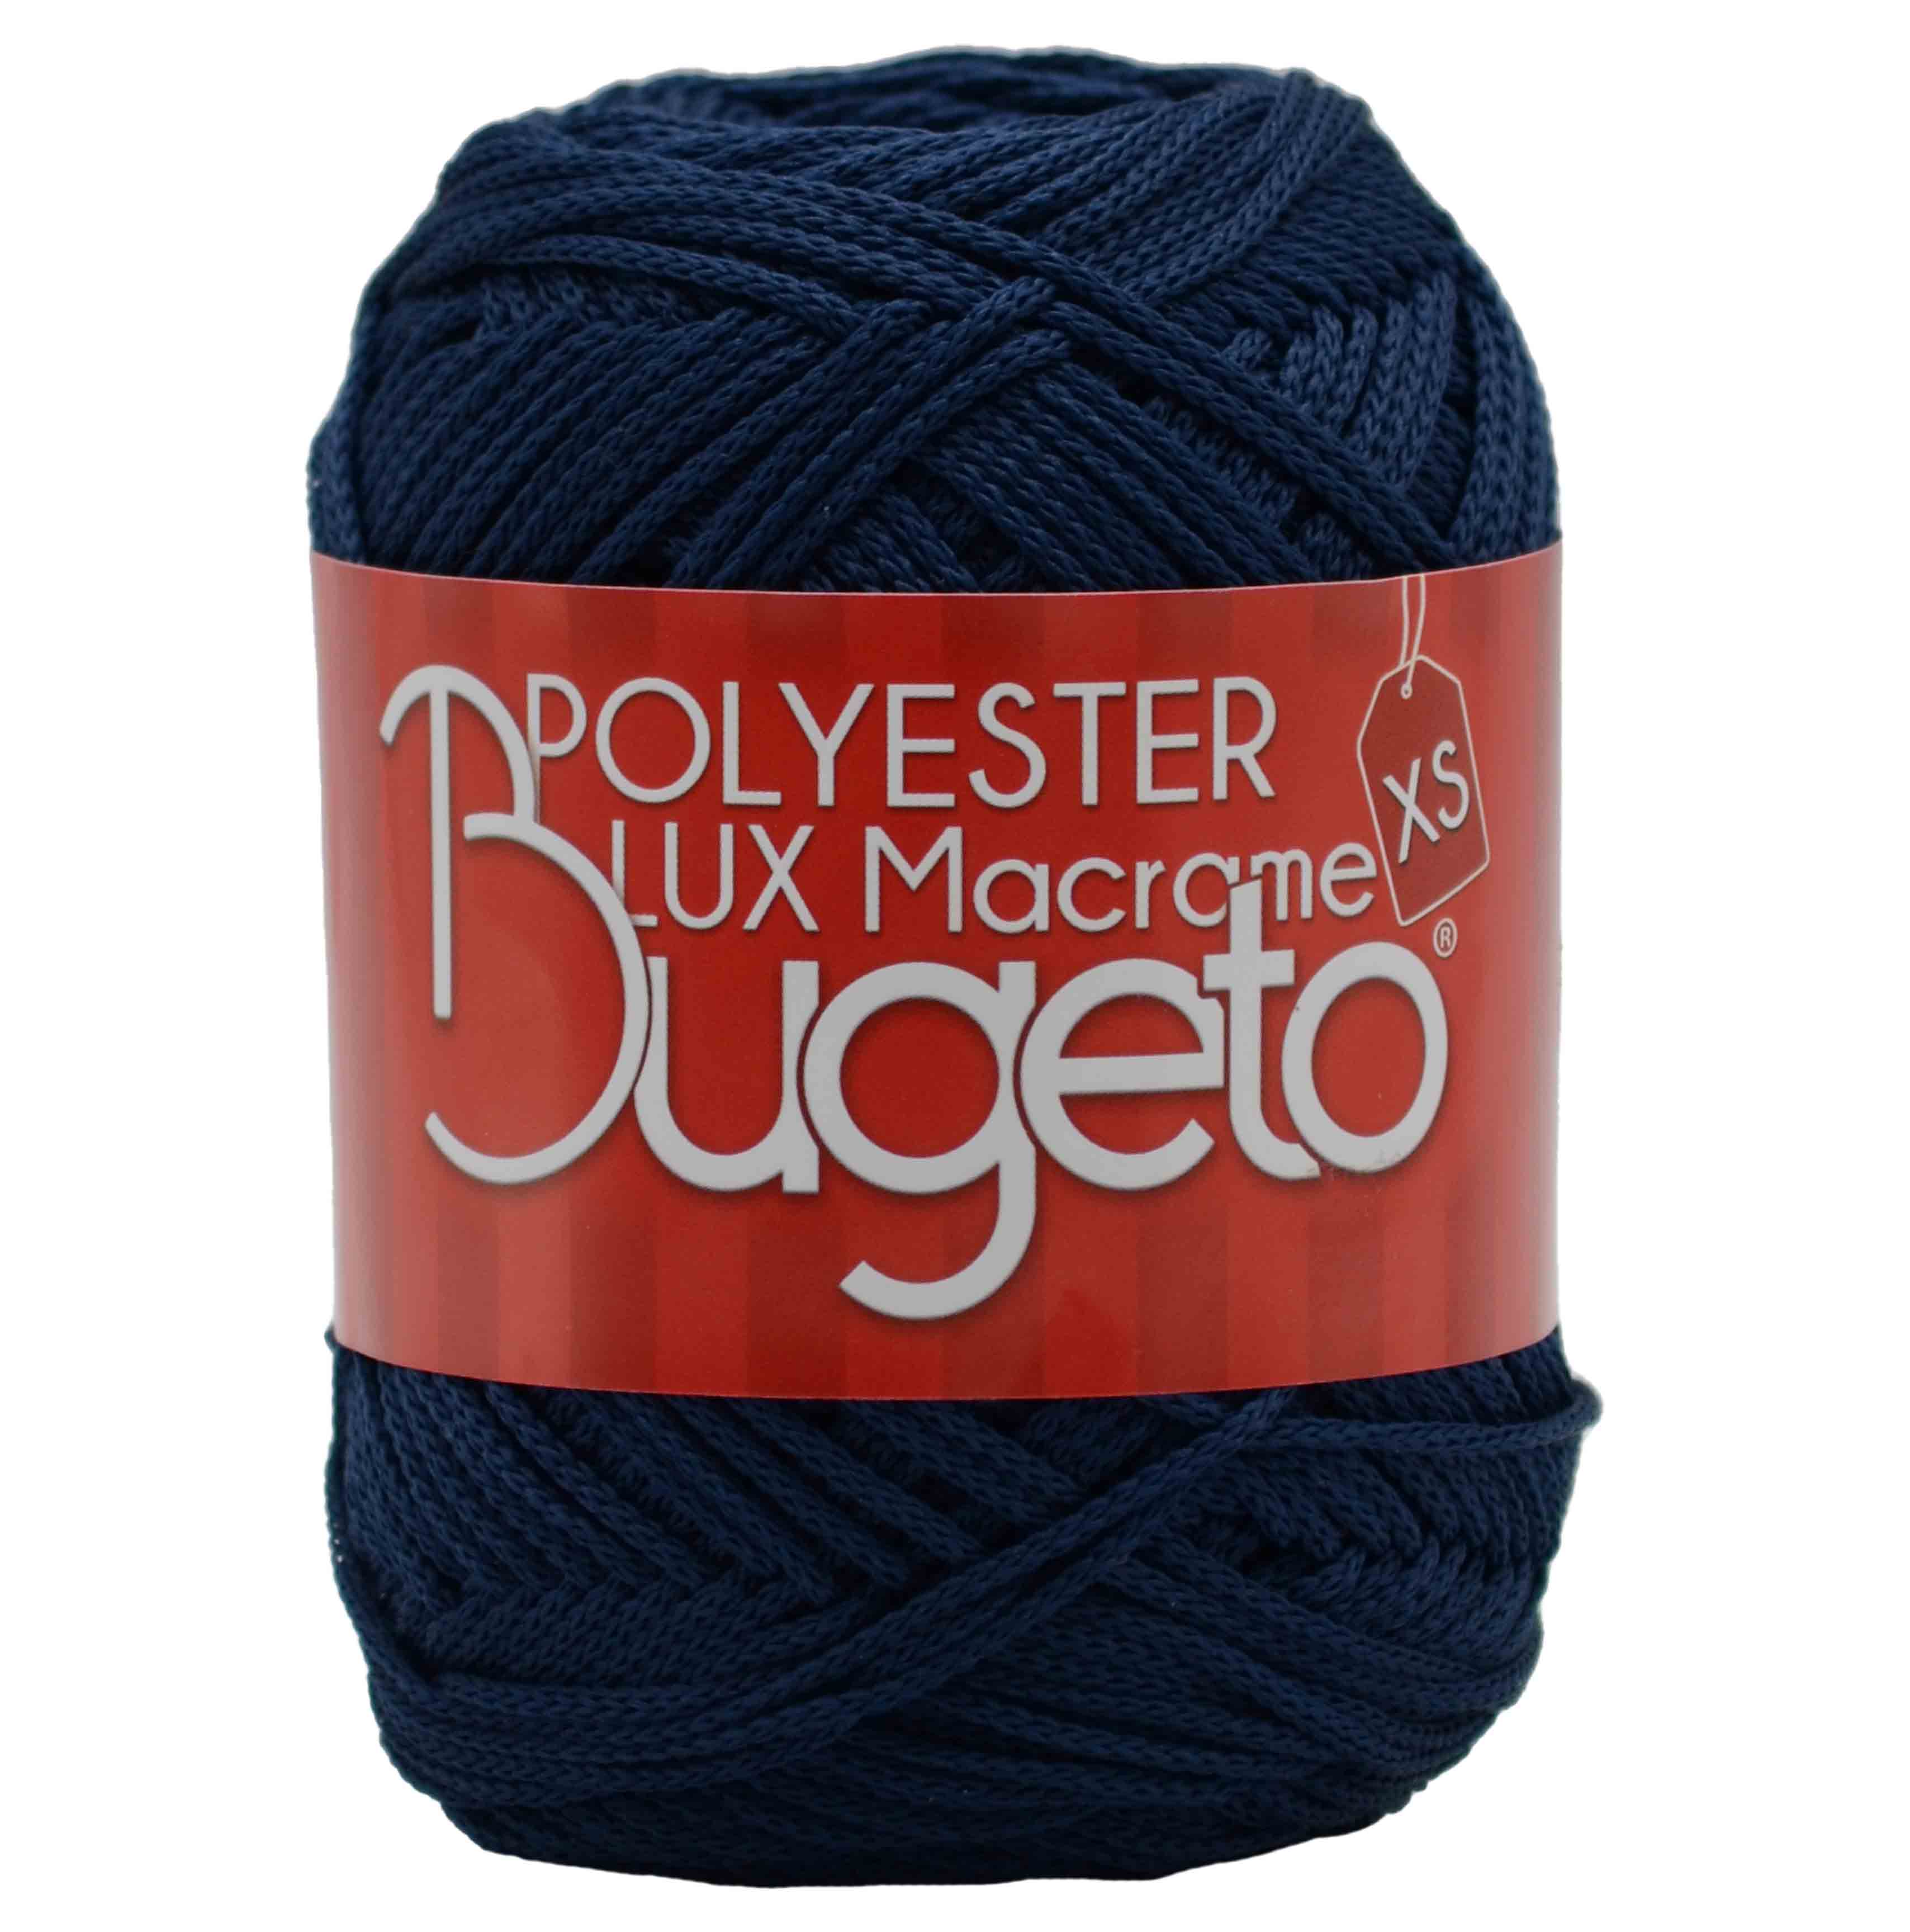 polyster yarns soft macrame yarns bugeto yarn lux polyester yarn polyester lux macrame